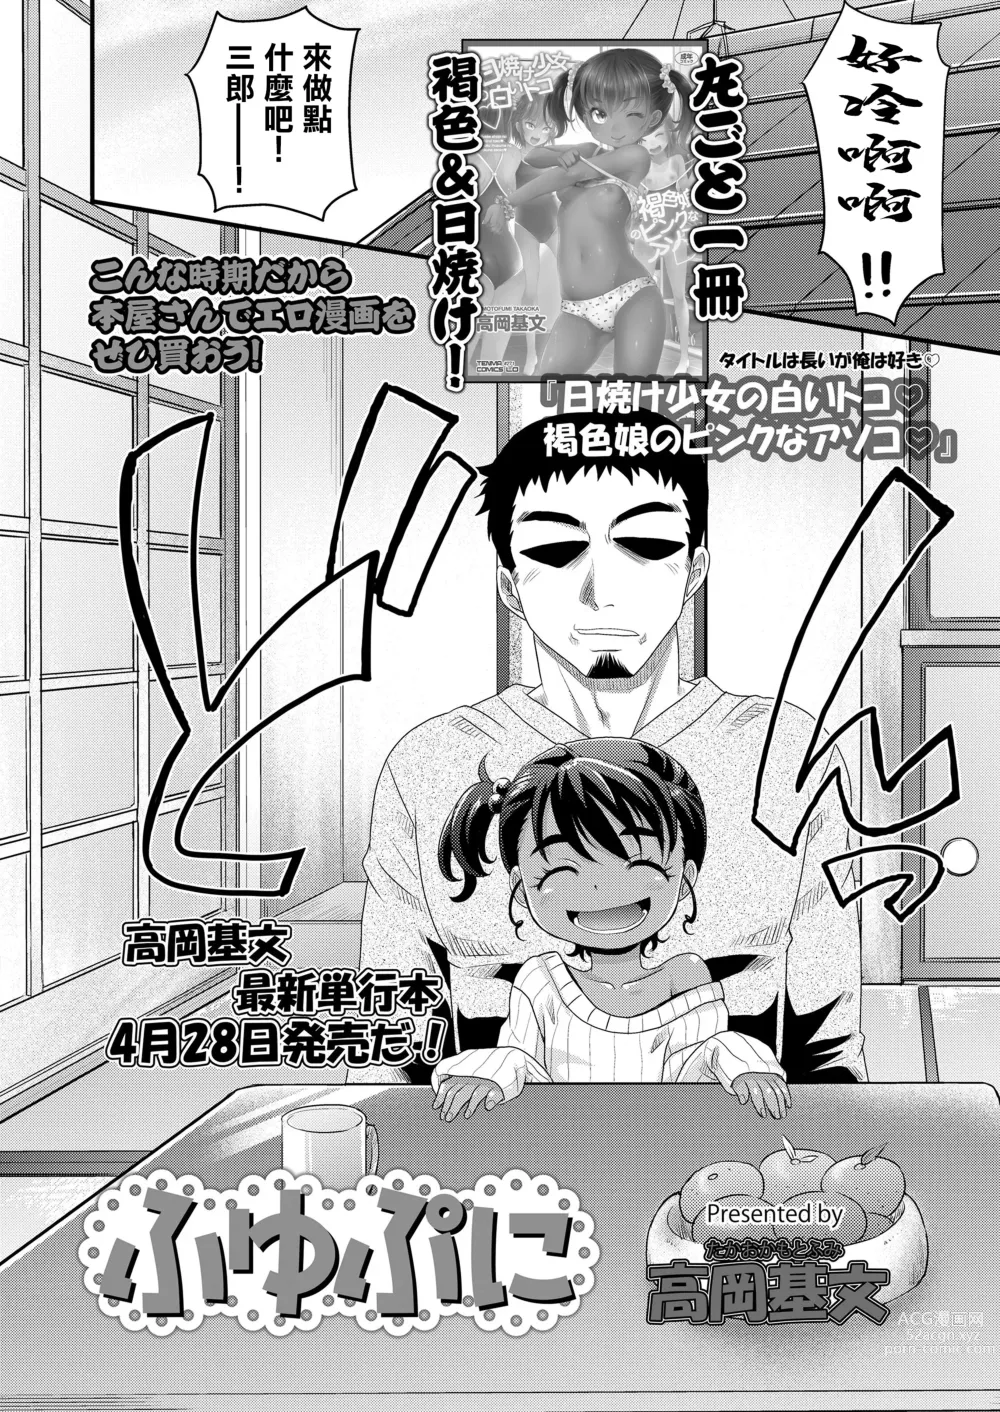 Page 2 of manga Fuyu Puni